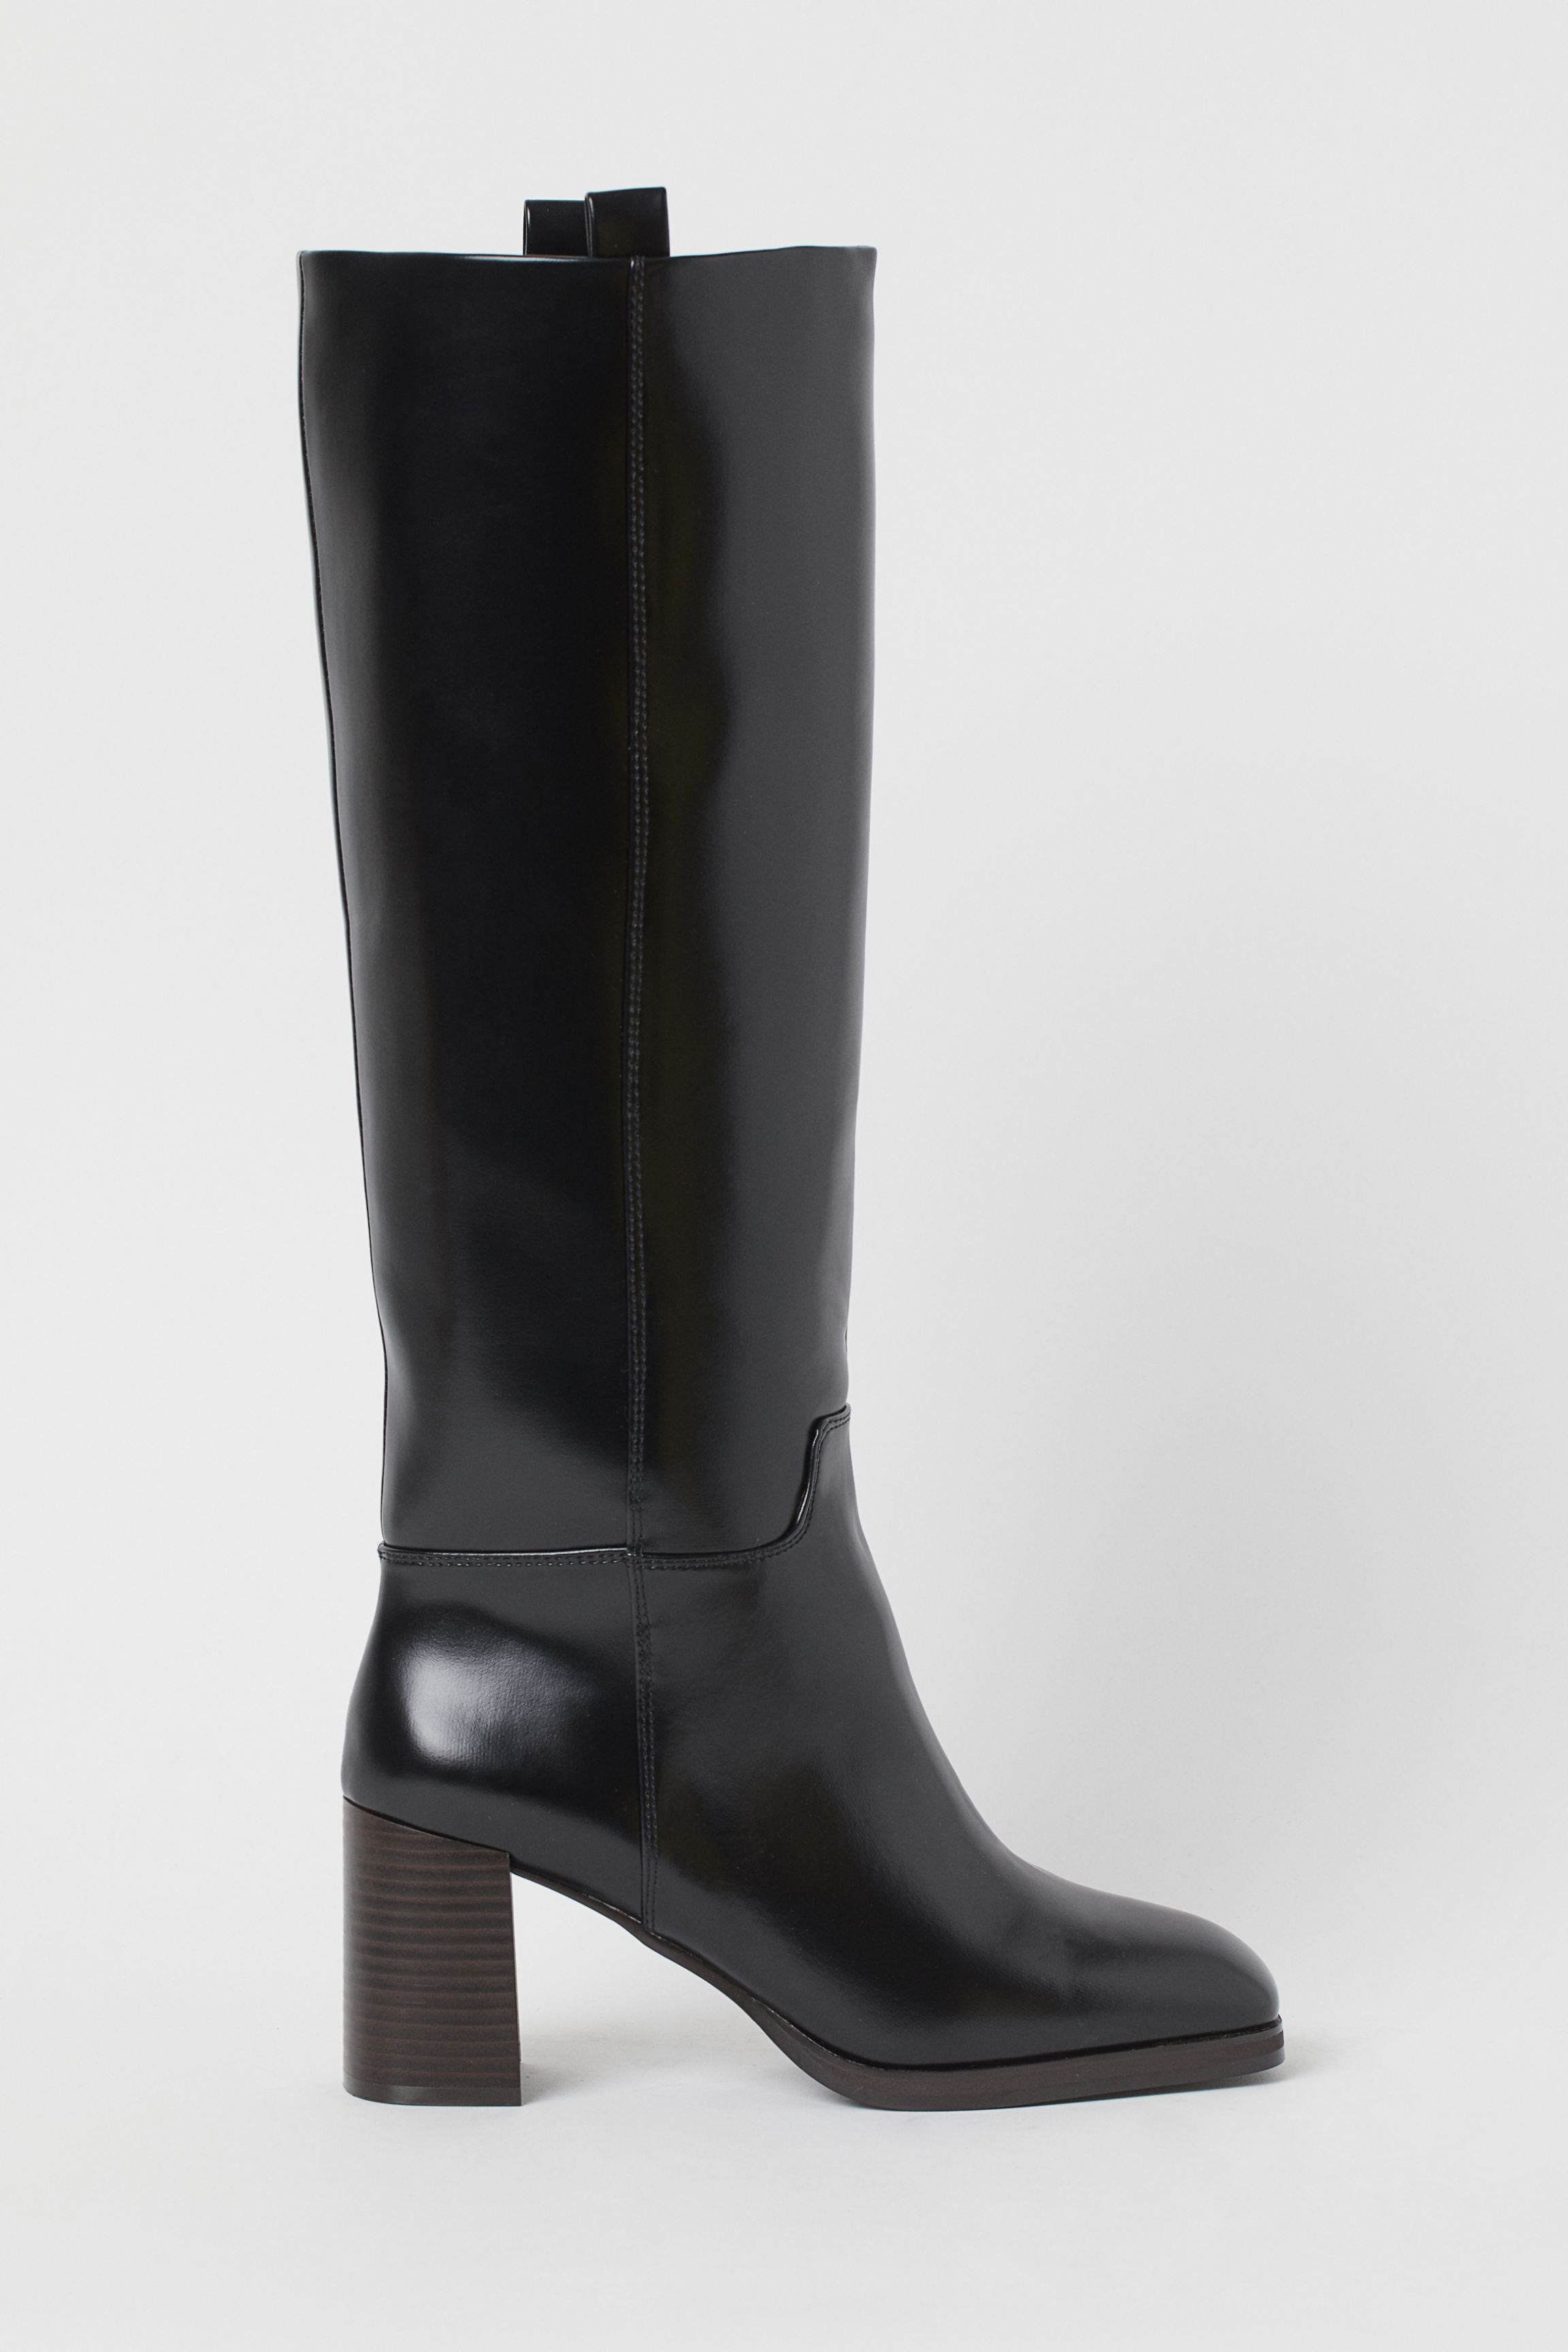 H&M + Block-Heeled Boots